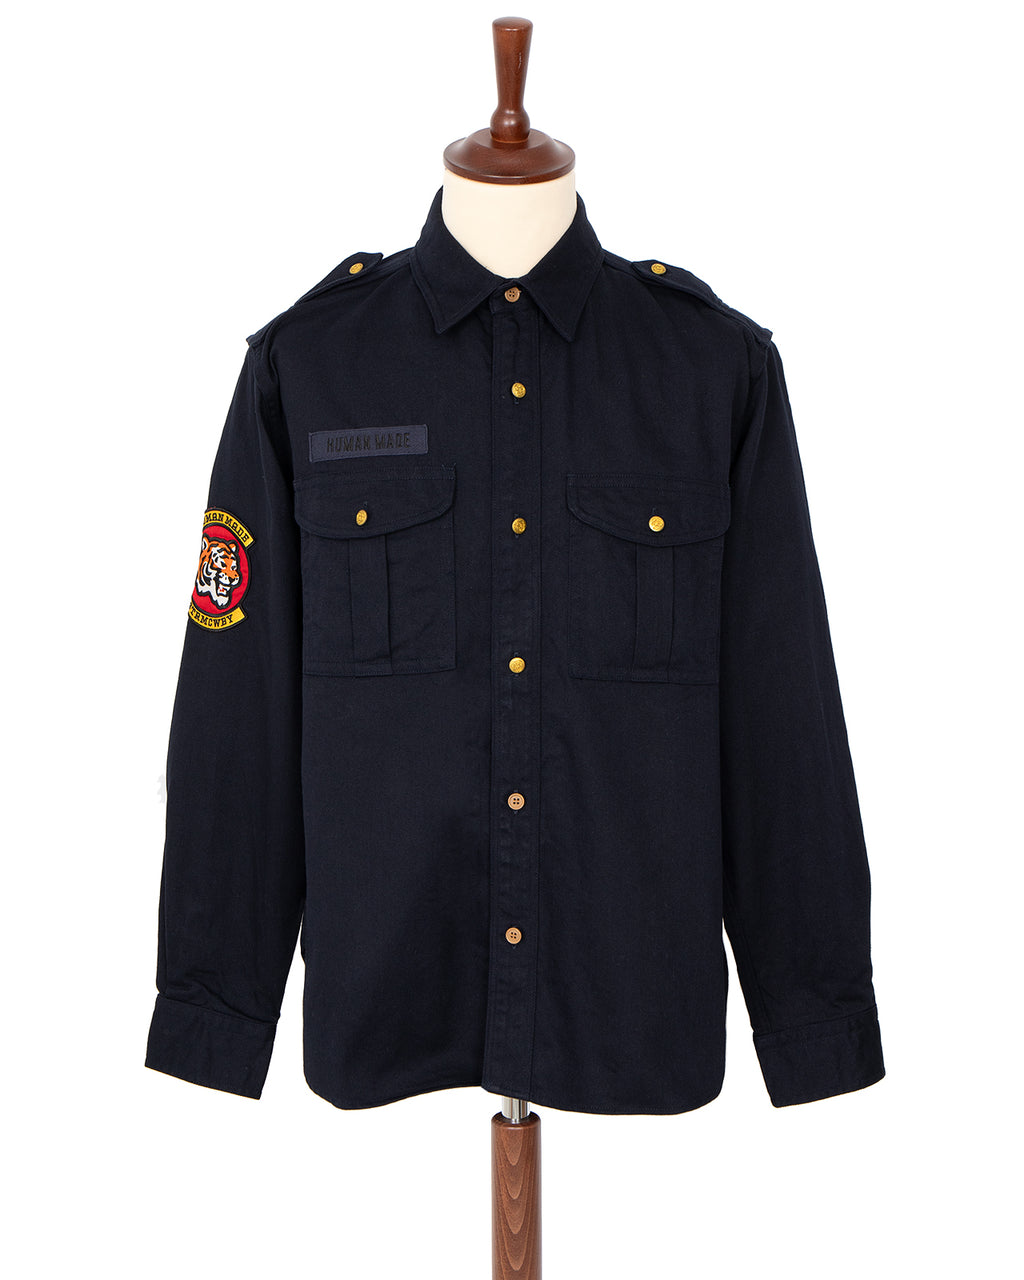 Human Made Boyscout Shirt, Navy